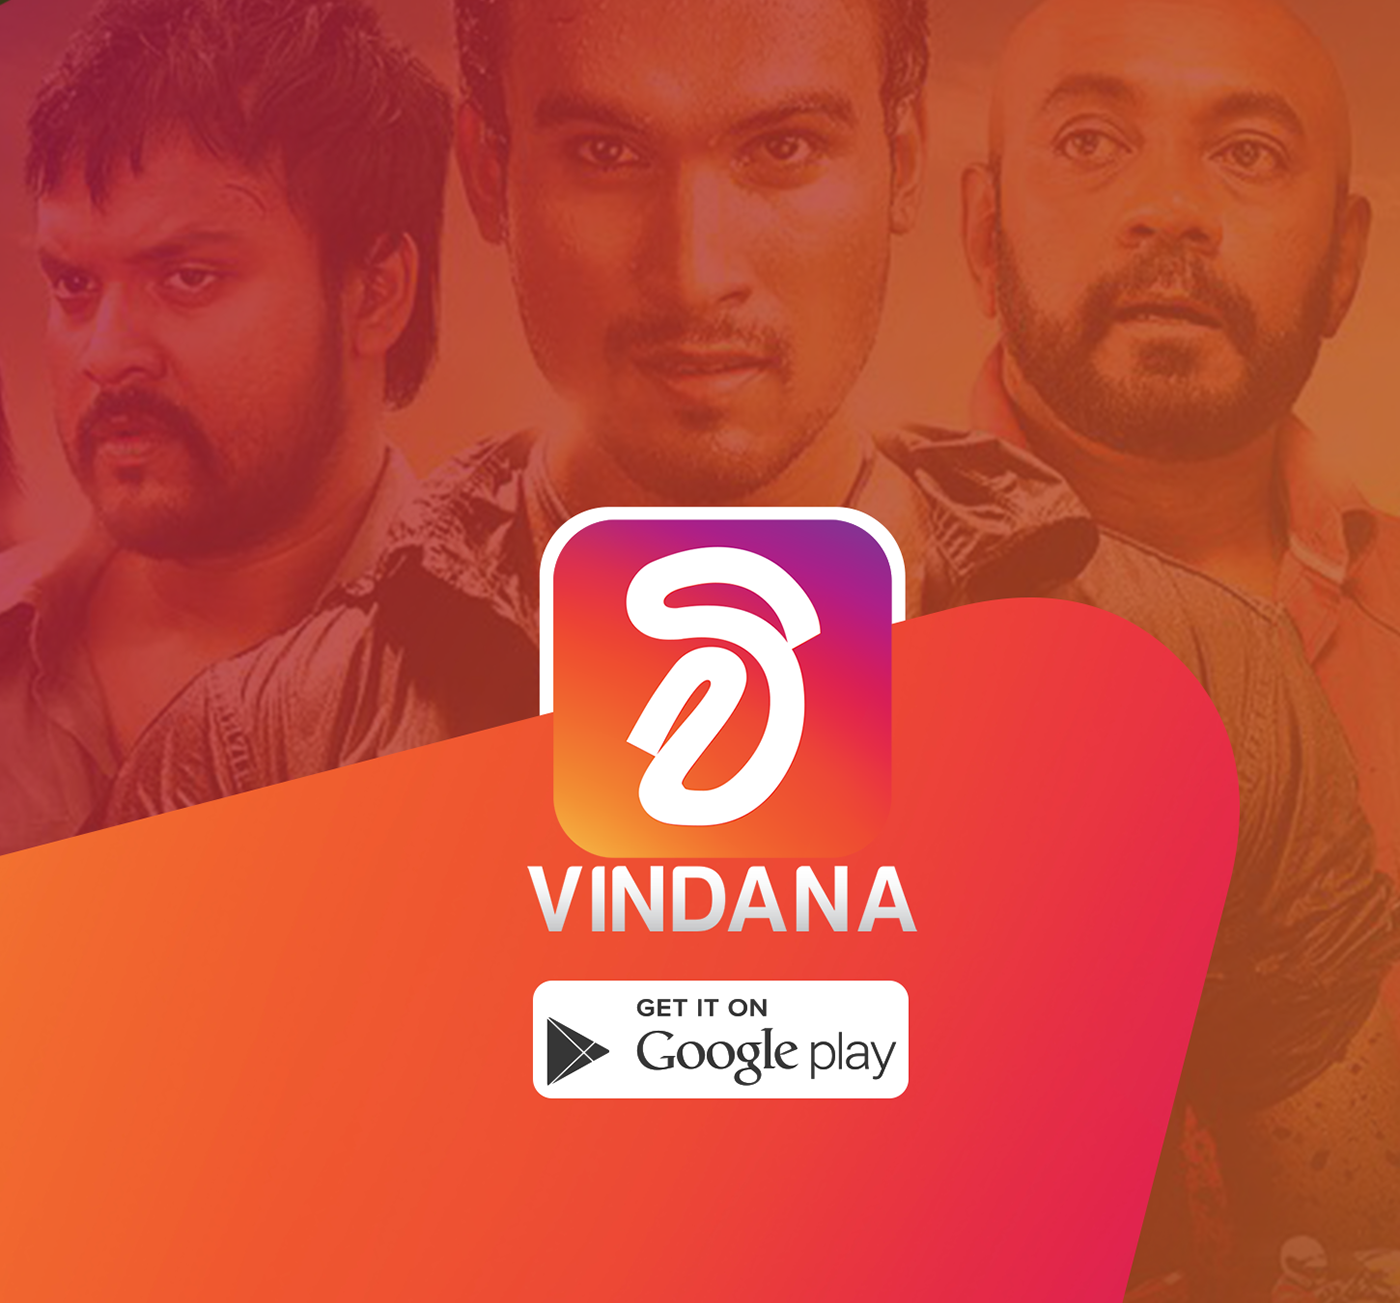 vindana app movie music Lanka mobileapp Enetertainment music videos tv